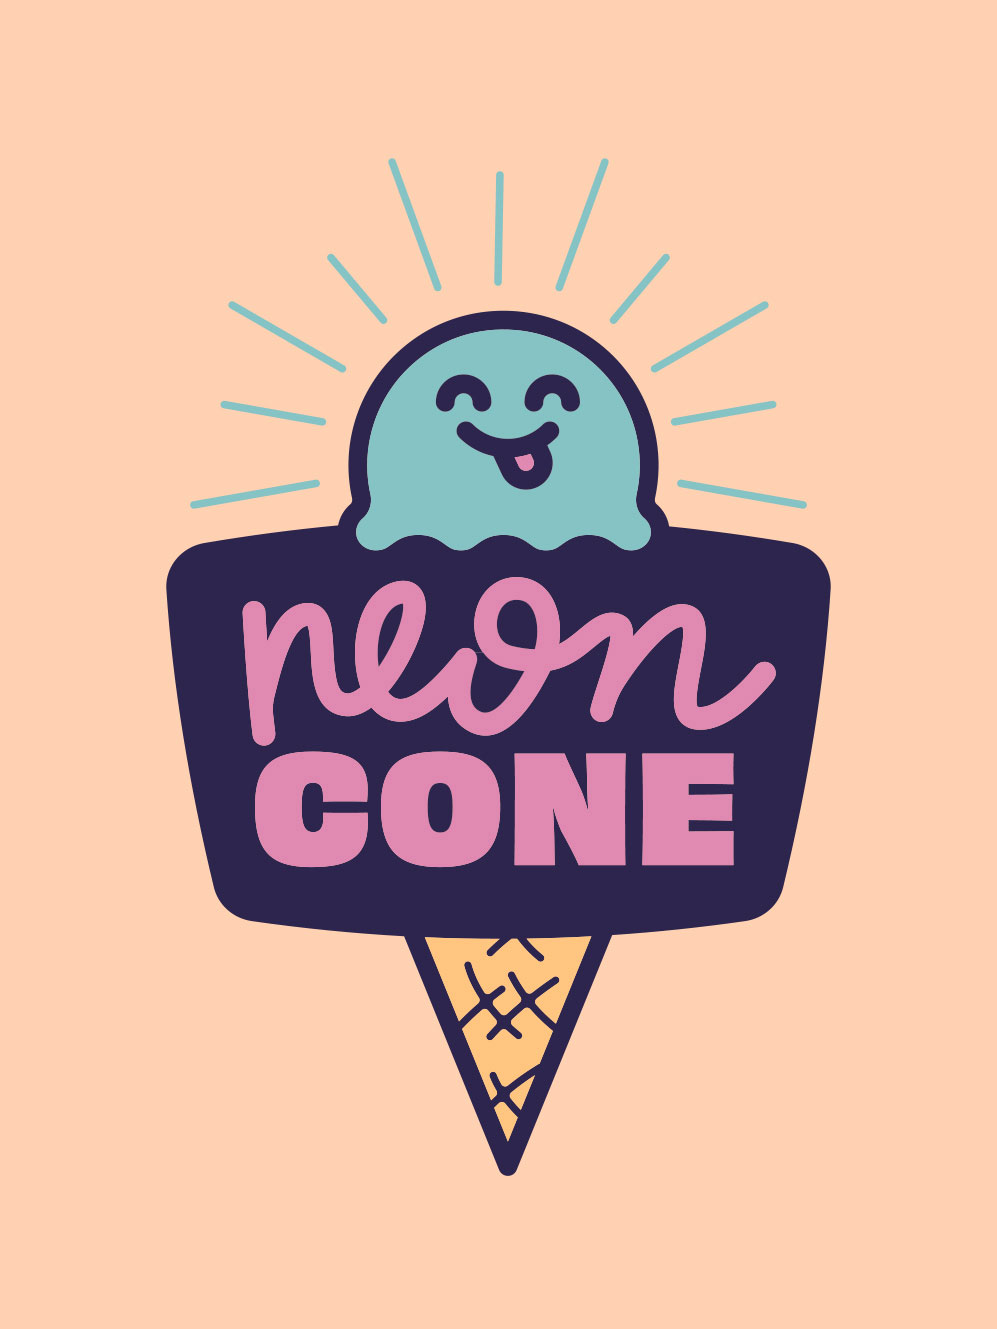 Neon Cone logo